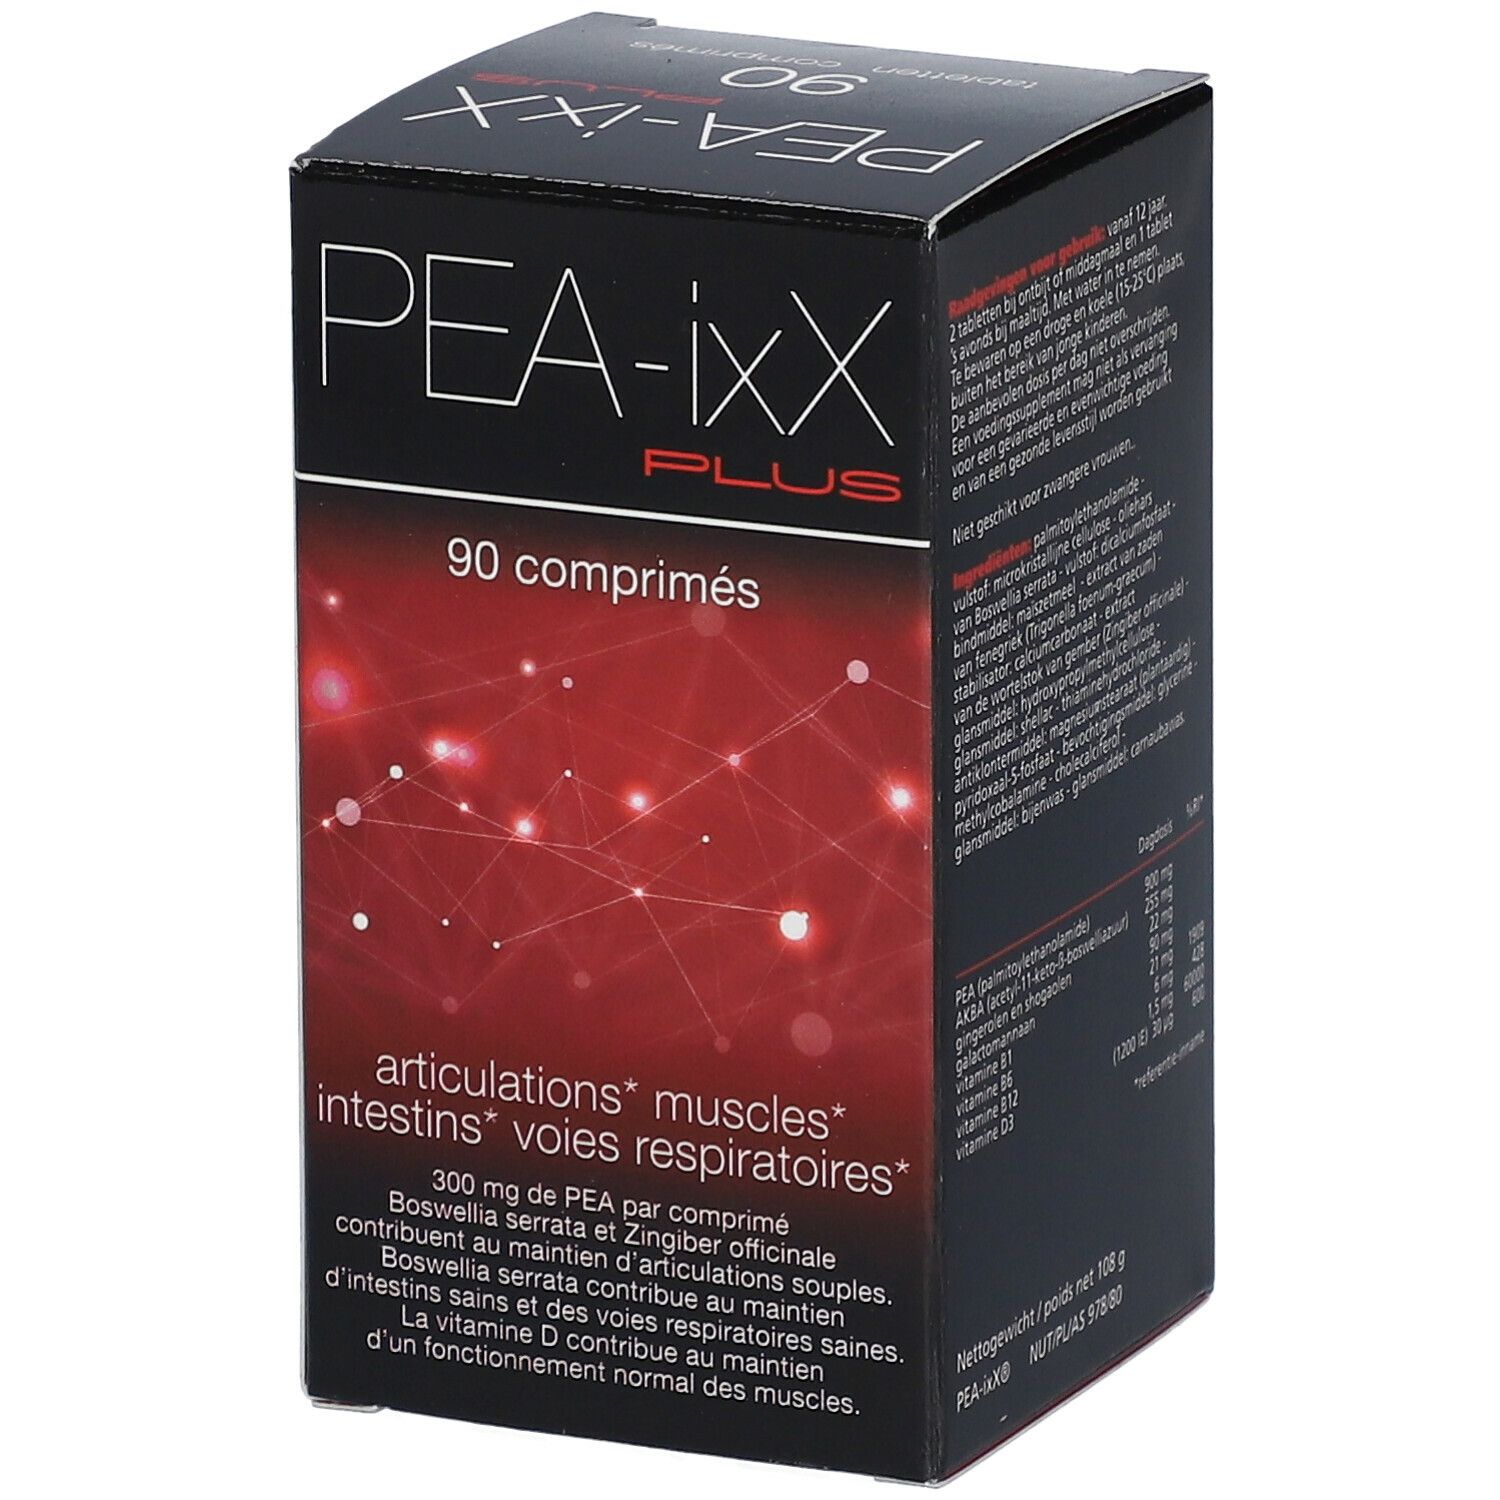 PEA-ixX Plus